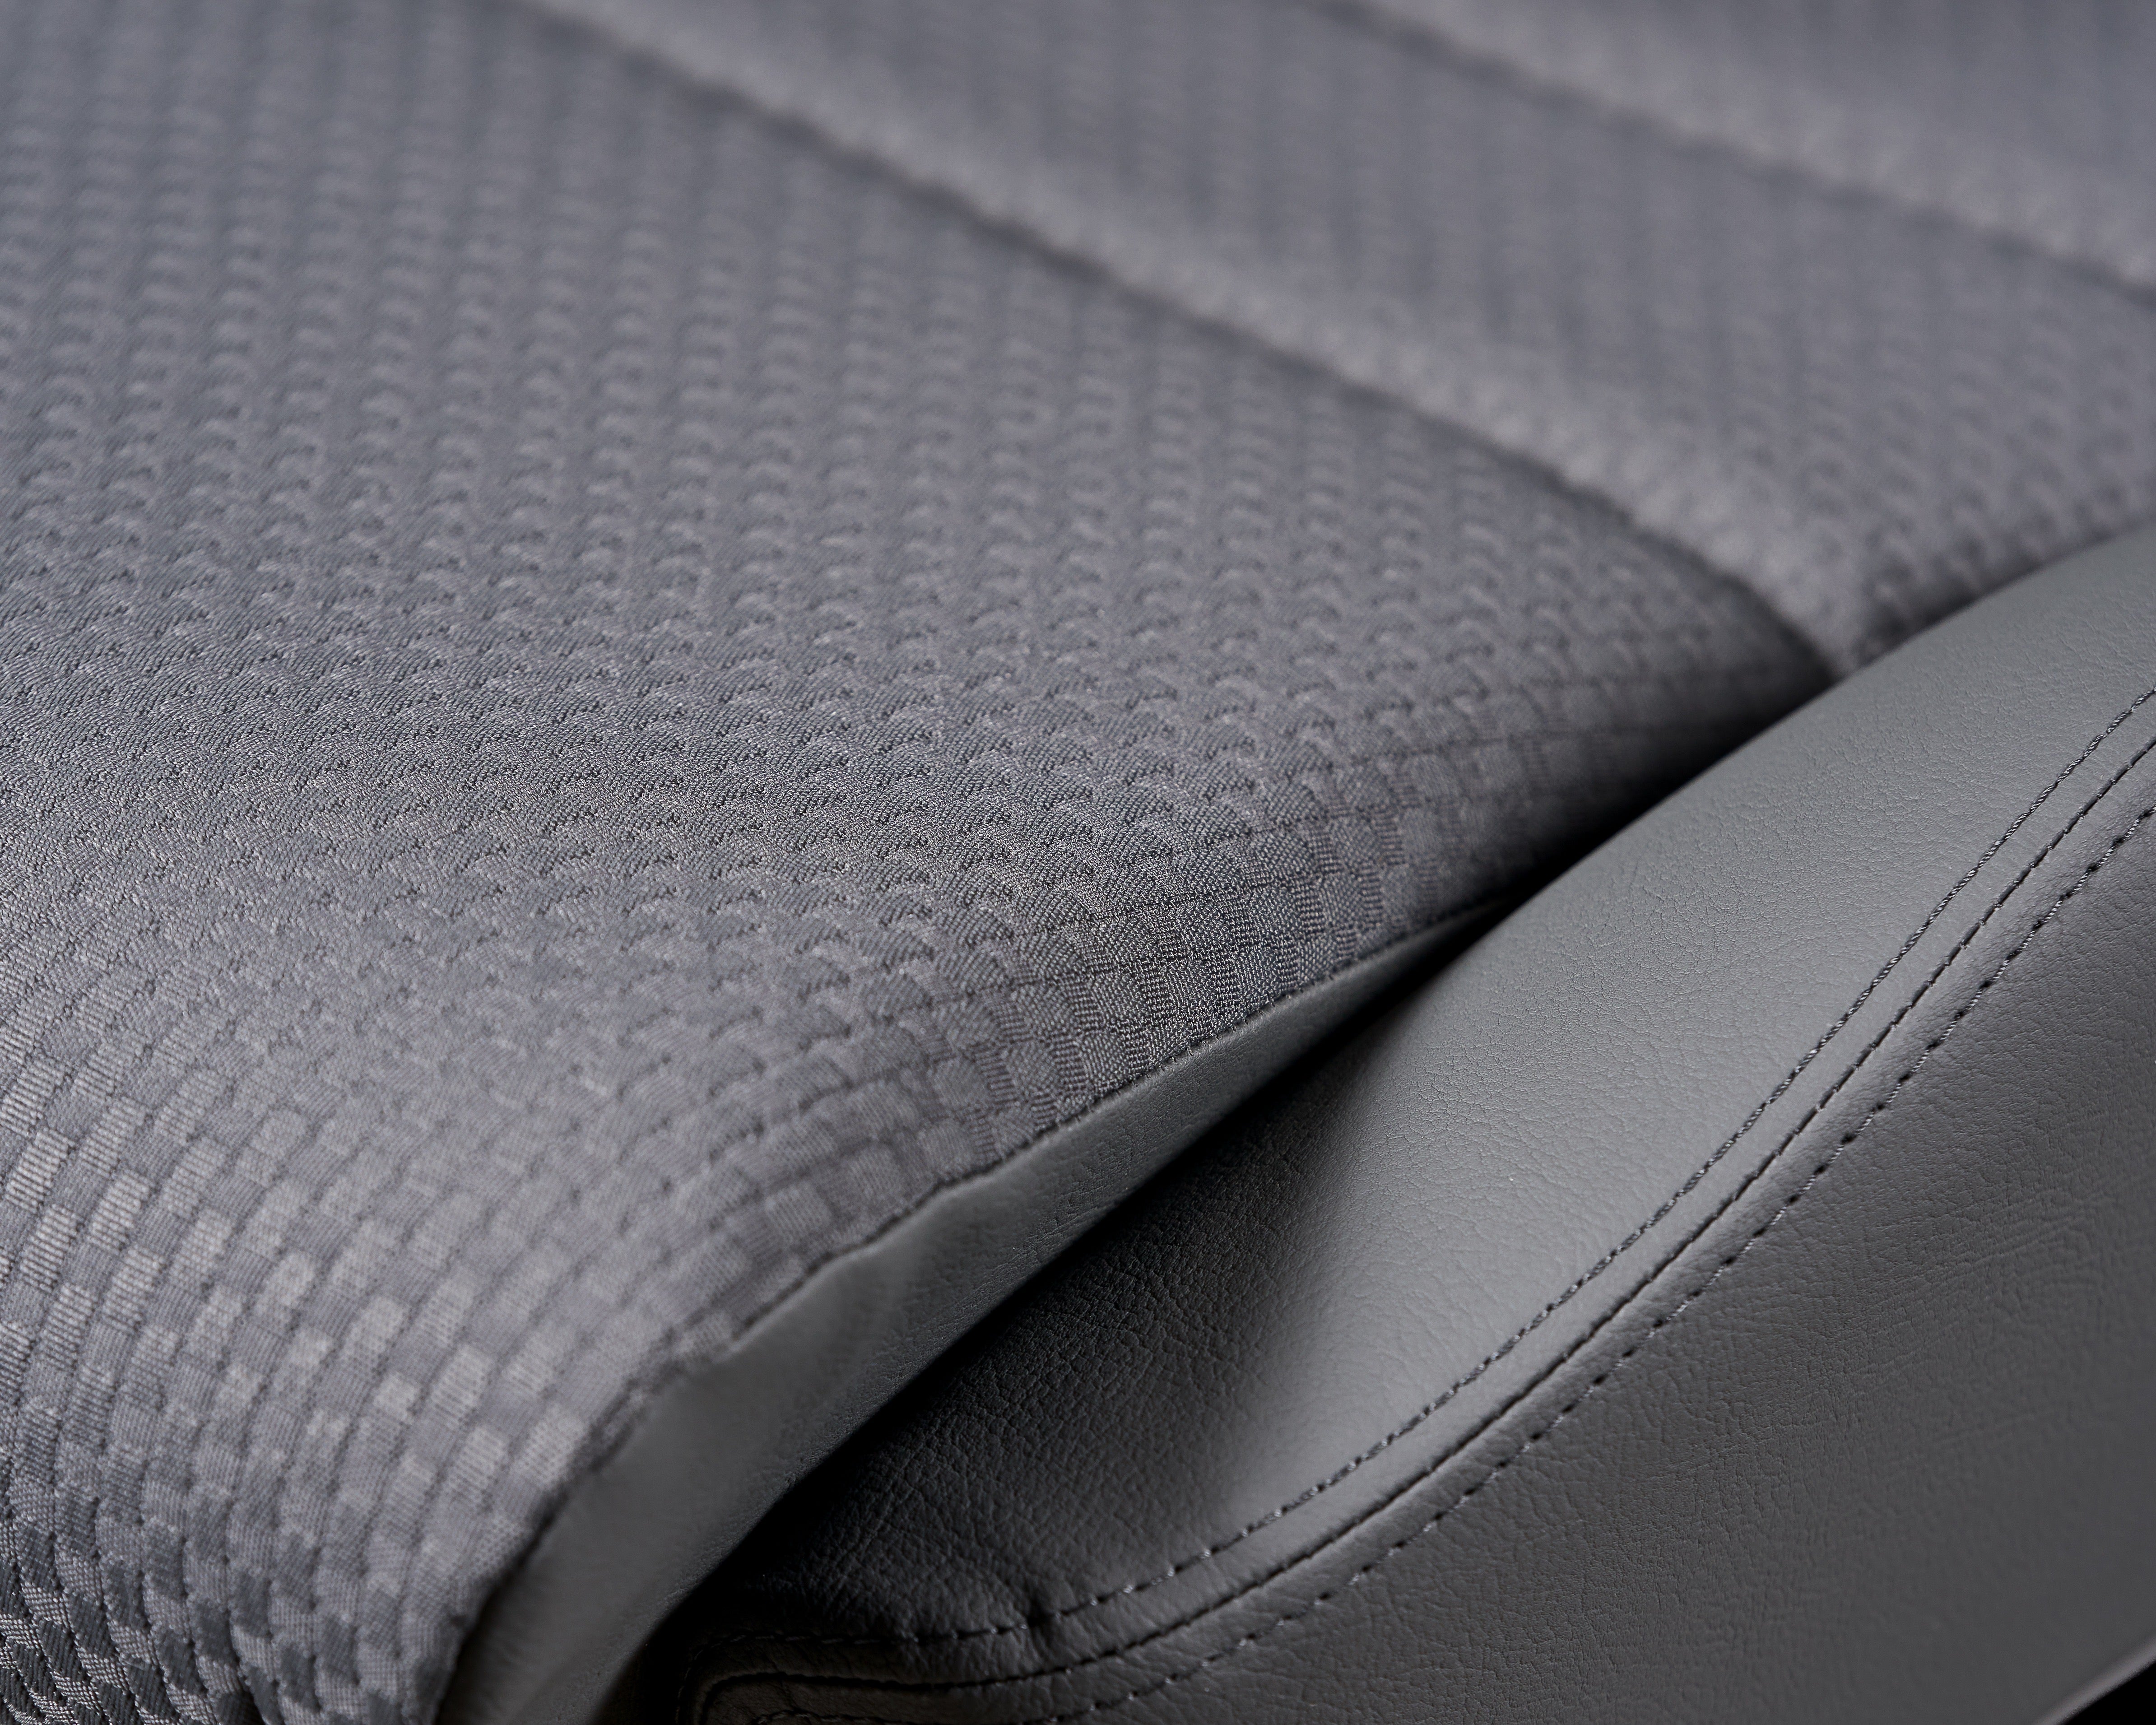 Upholstery - Grey Basketweave Cloth